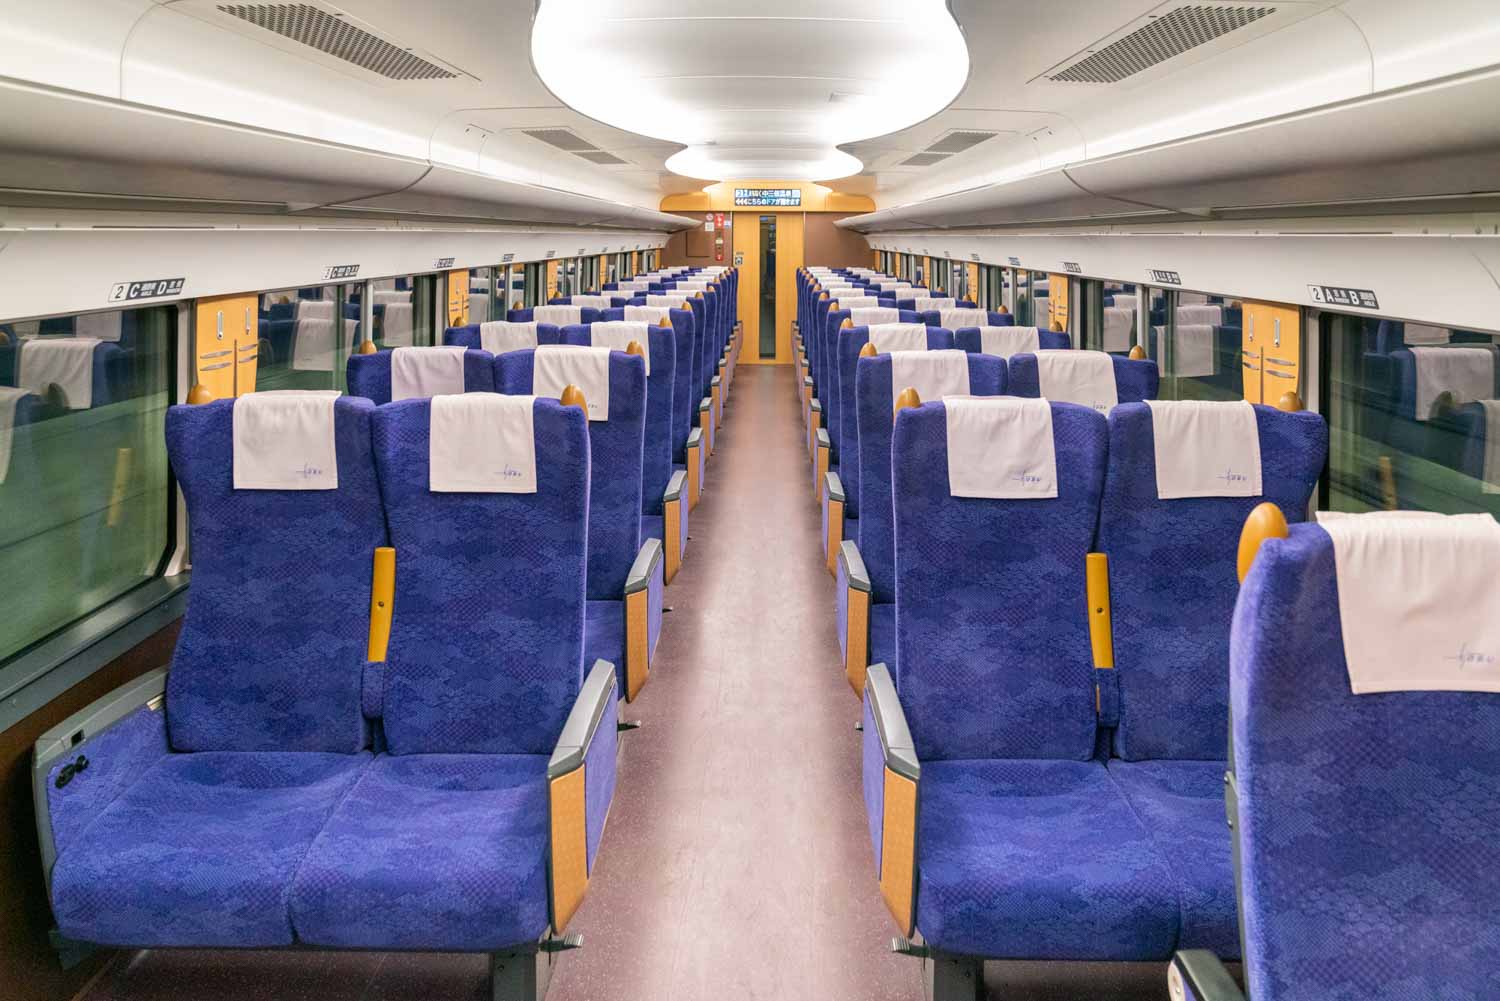 Limited Express Libert Aizu interior seats in japan